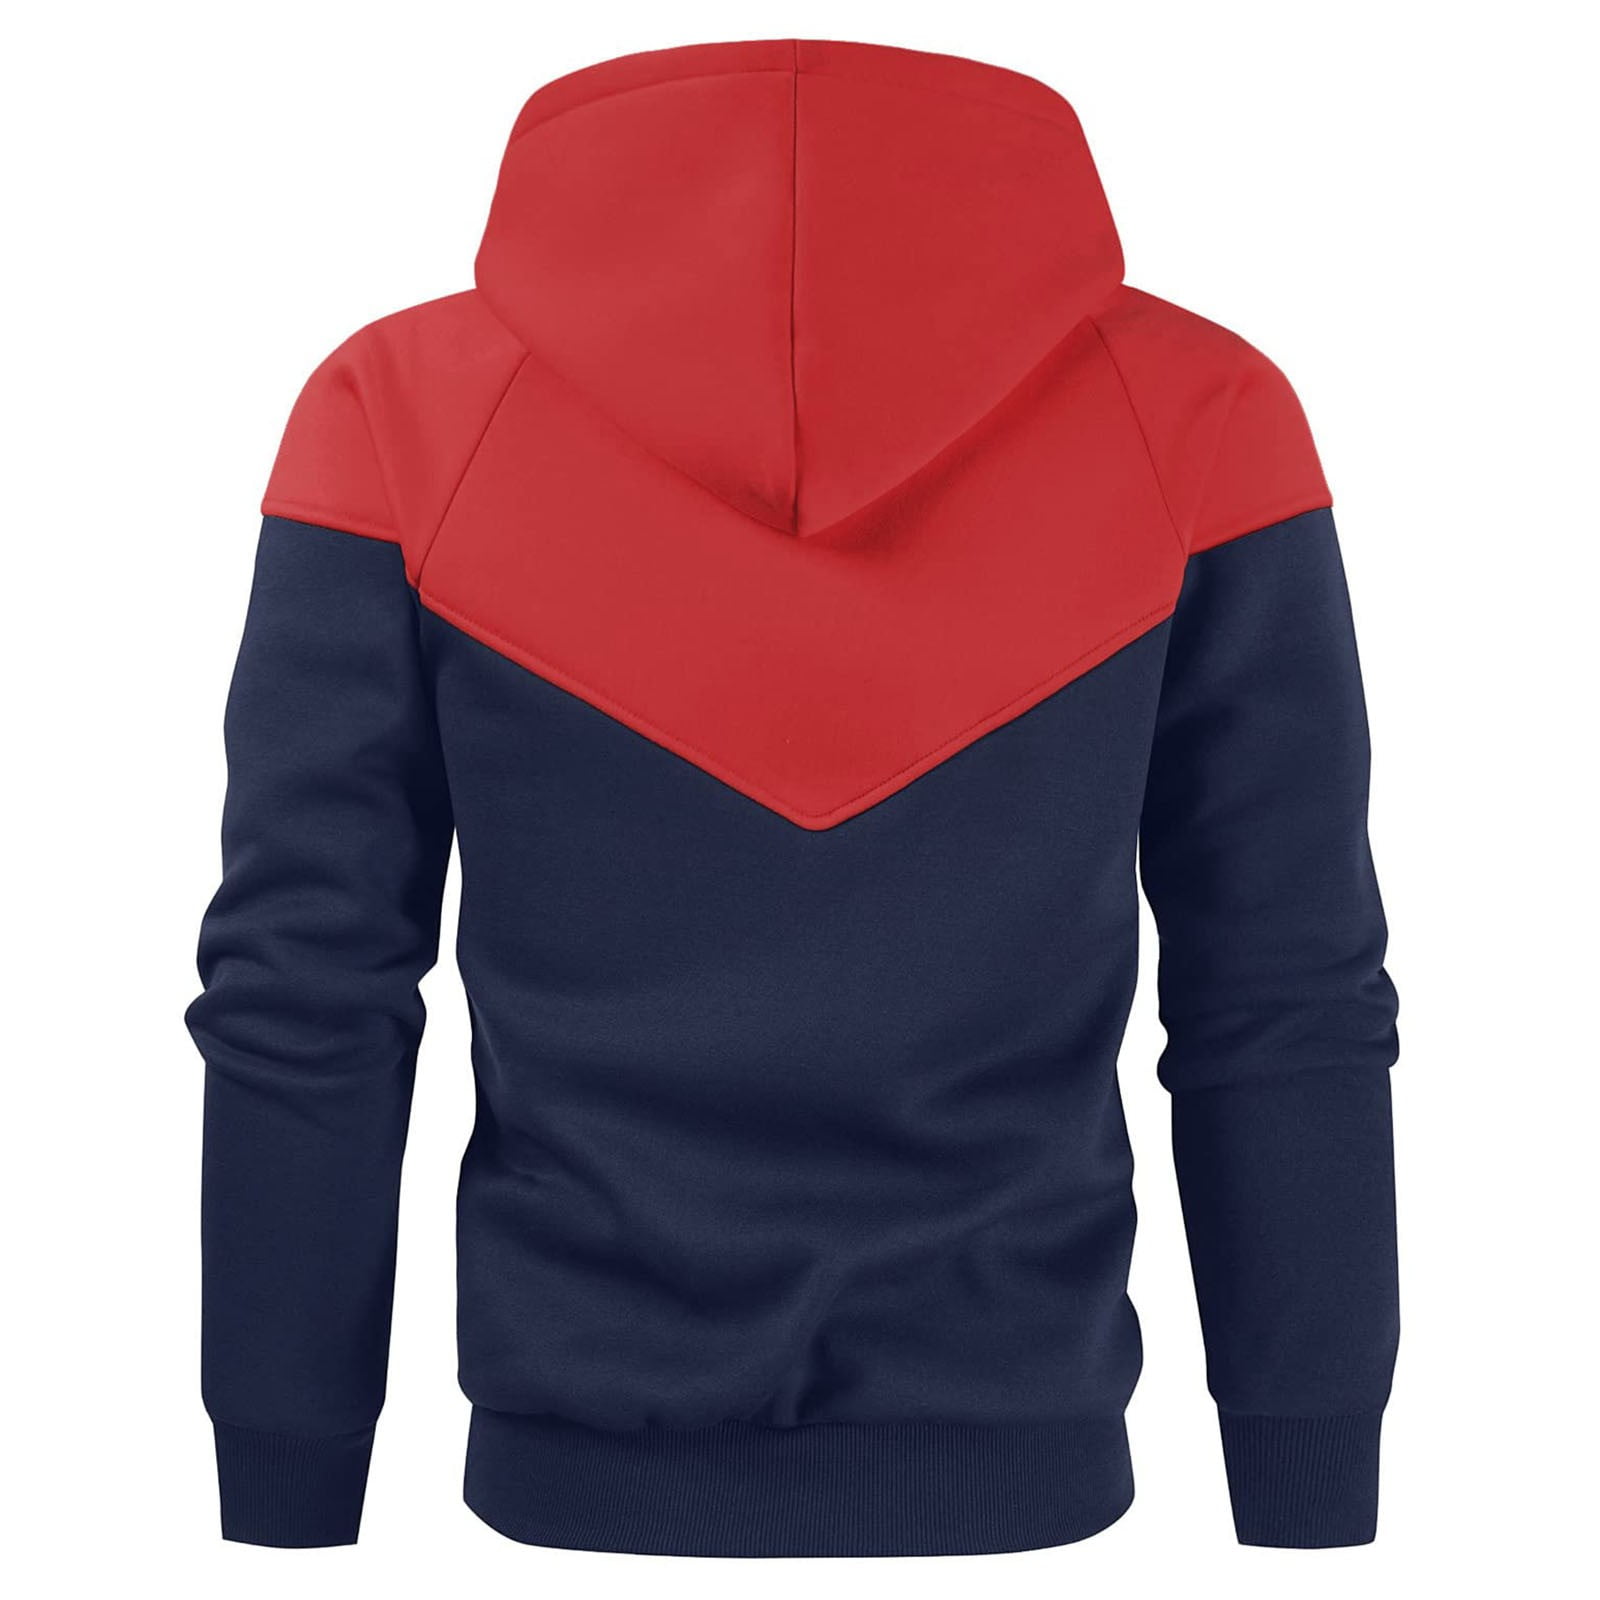 LEEy-world Hoodies for Men Full Zip Mens Novelty Color Block Hoodies Cozy  Sport Outwear Red,XL